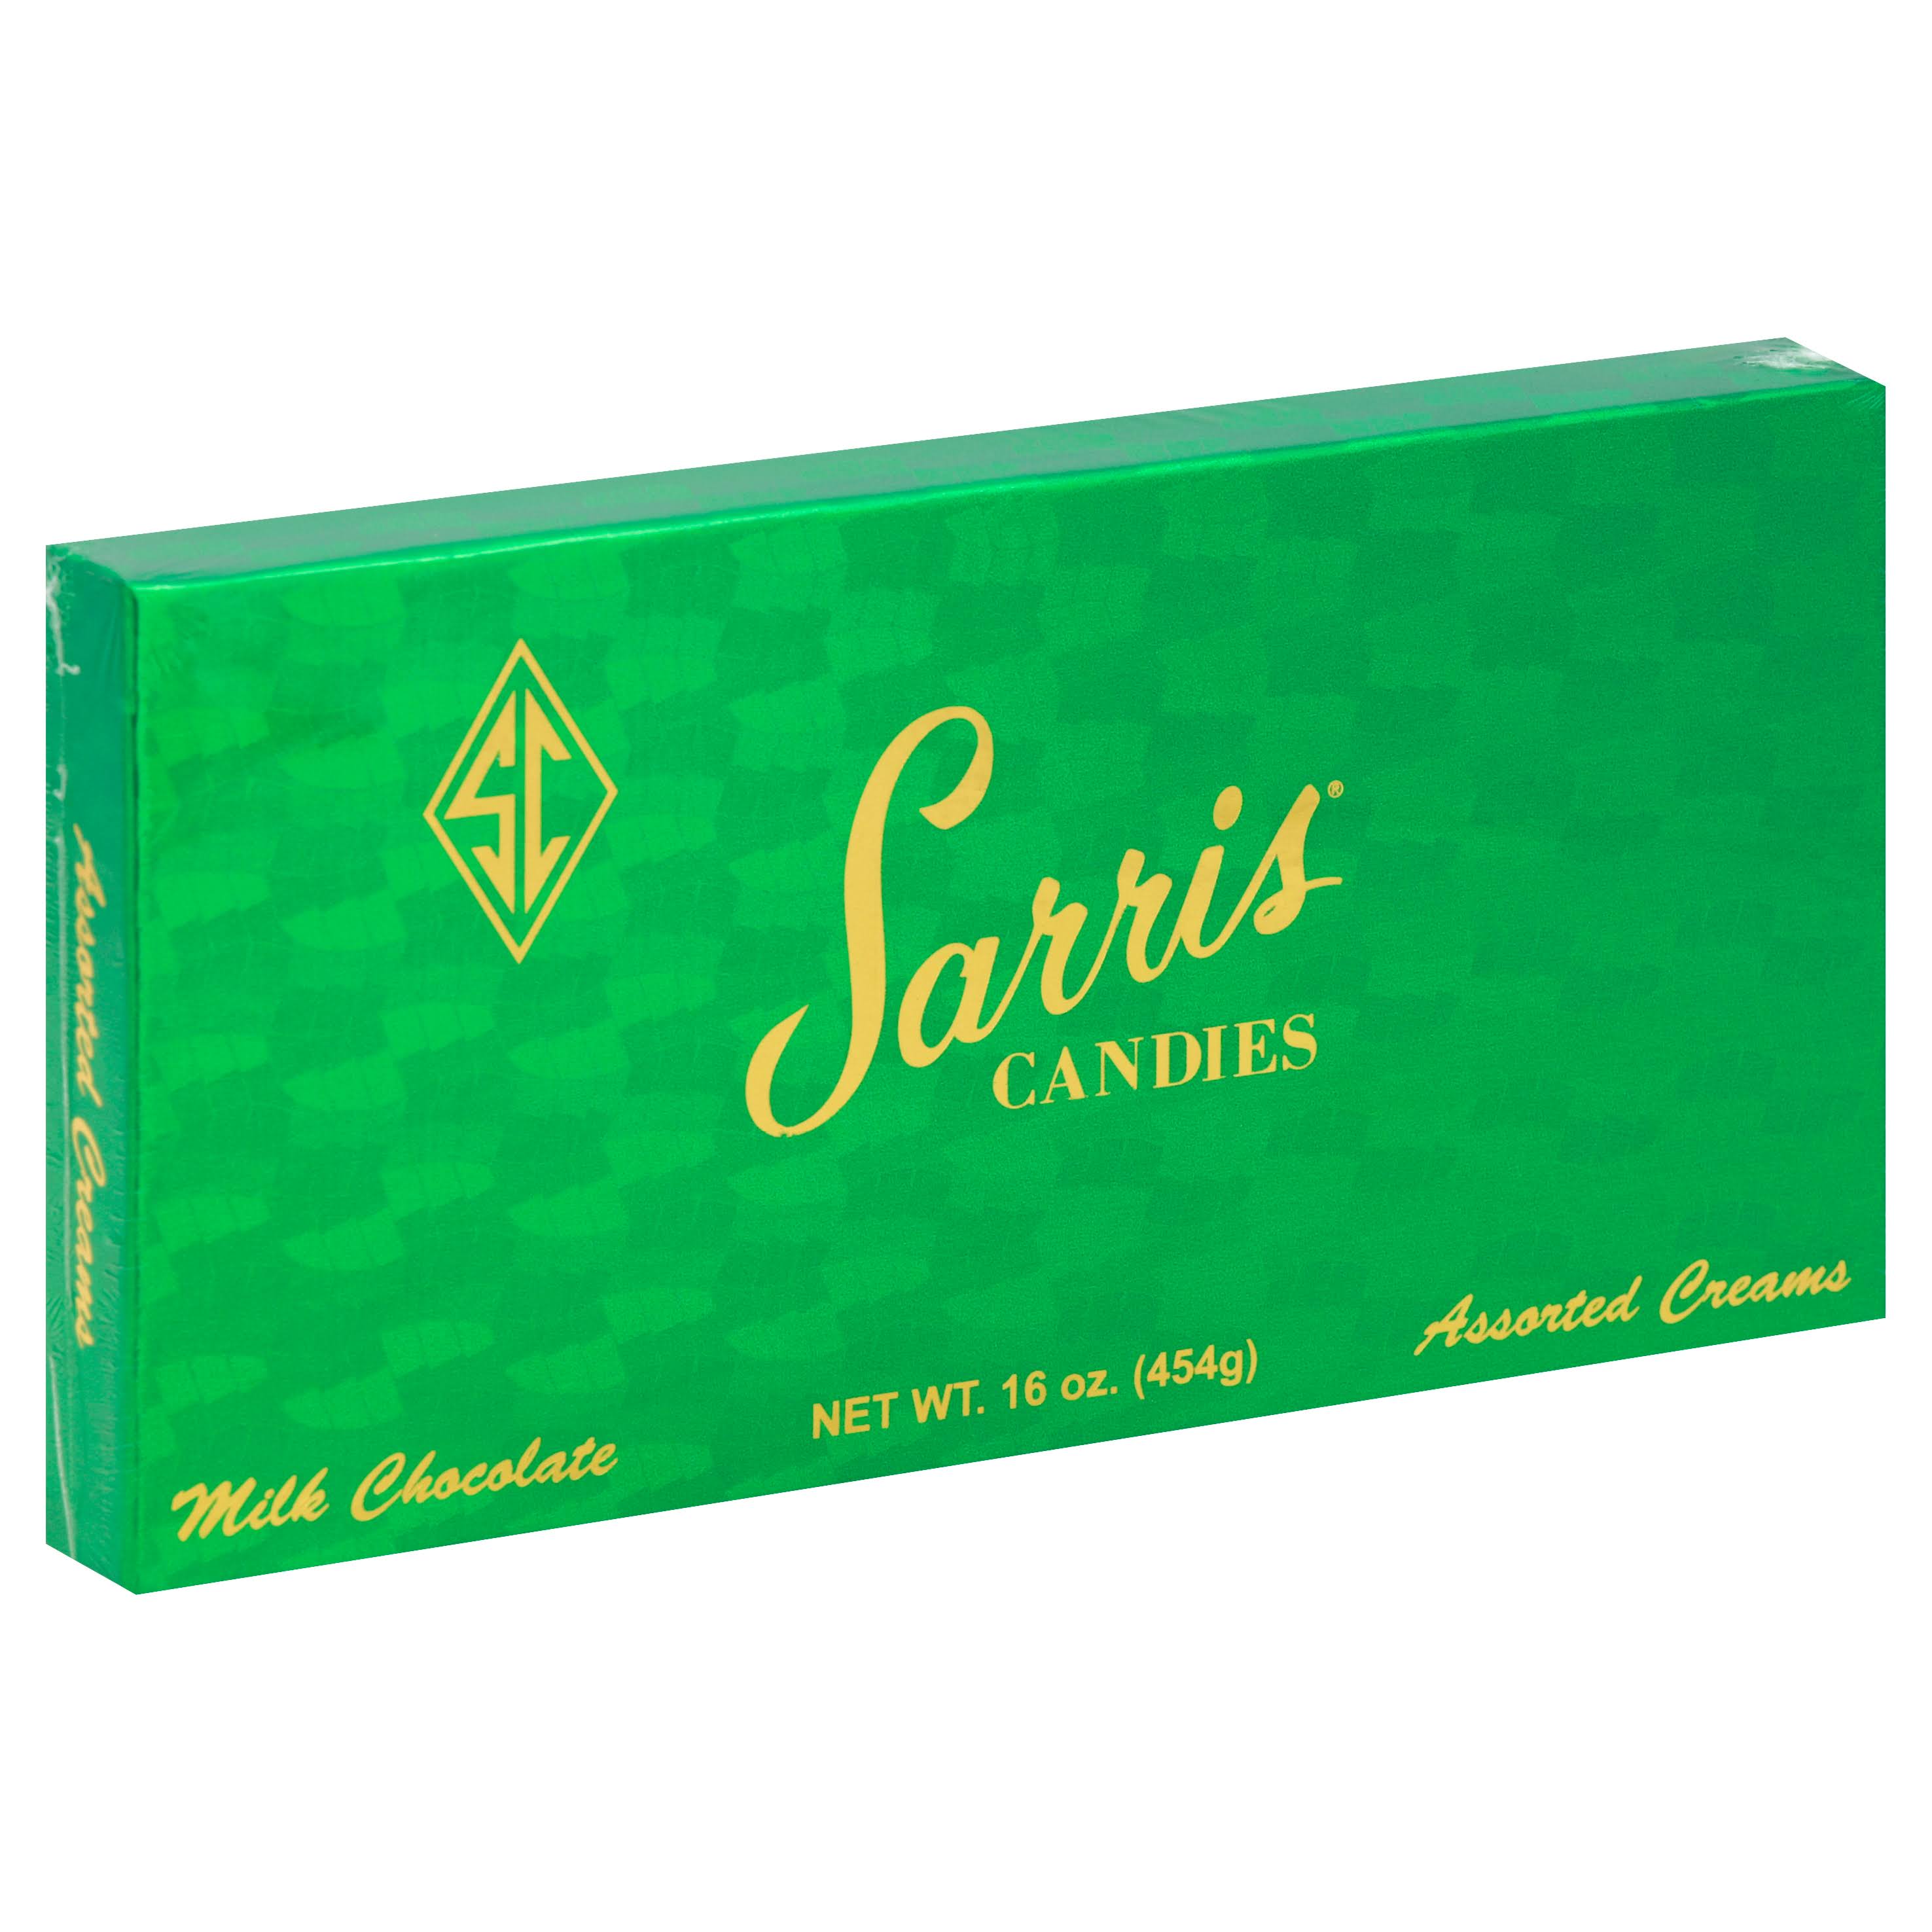 Sarris Candies Candies, Milk Chocolate Assorted Creams - 16 oz